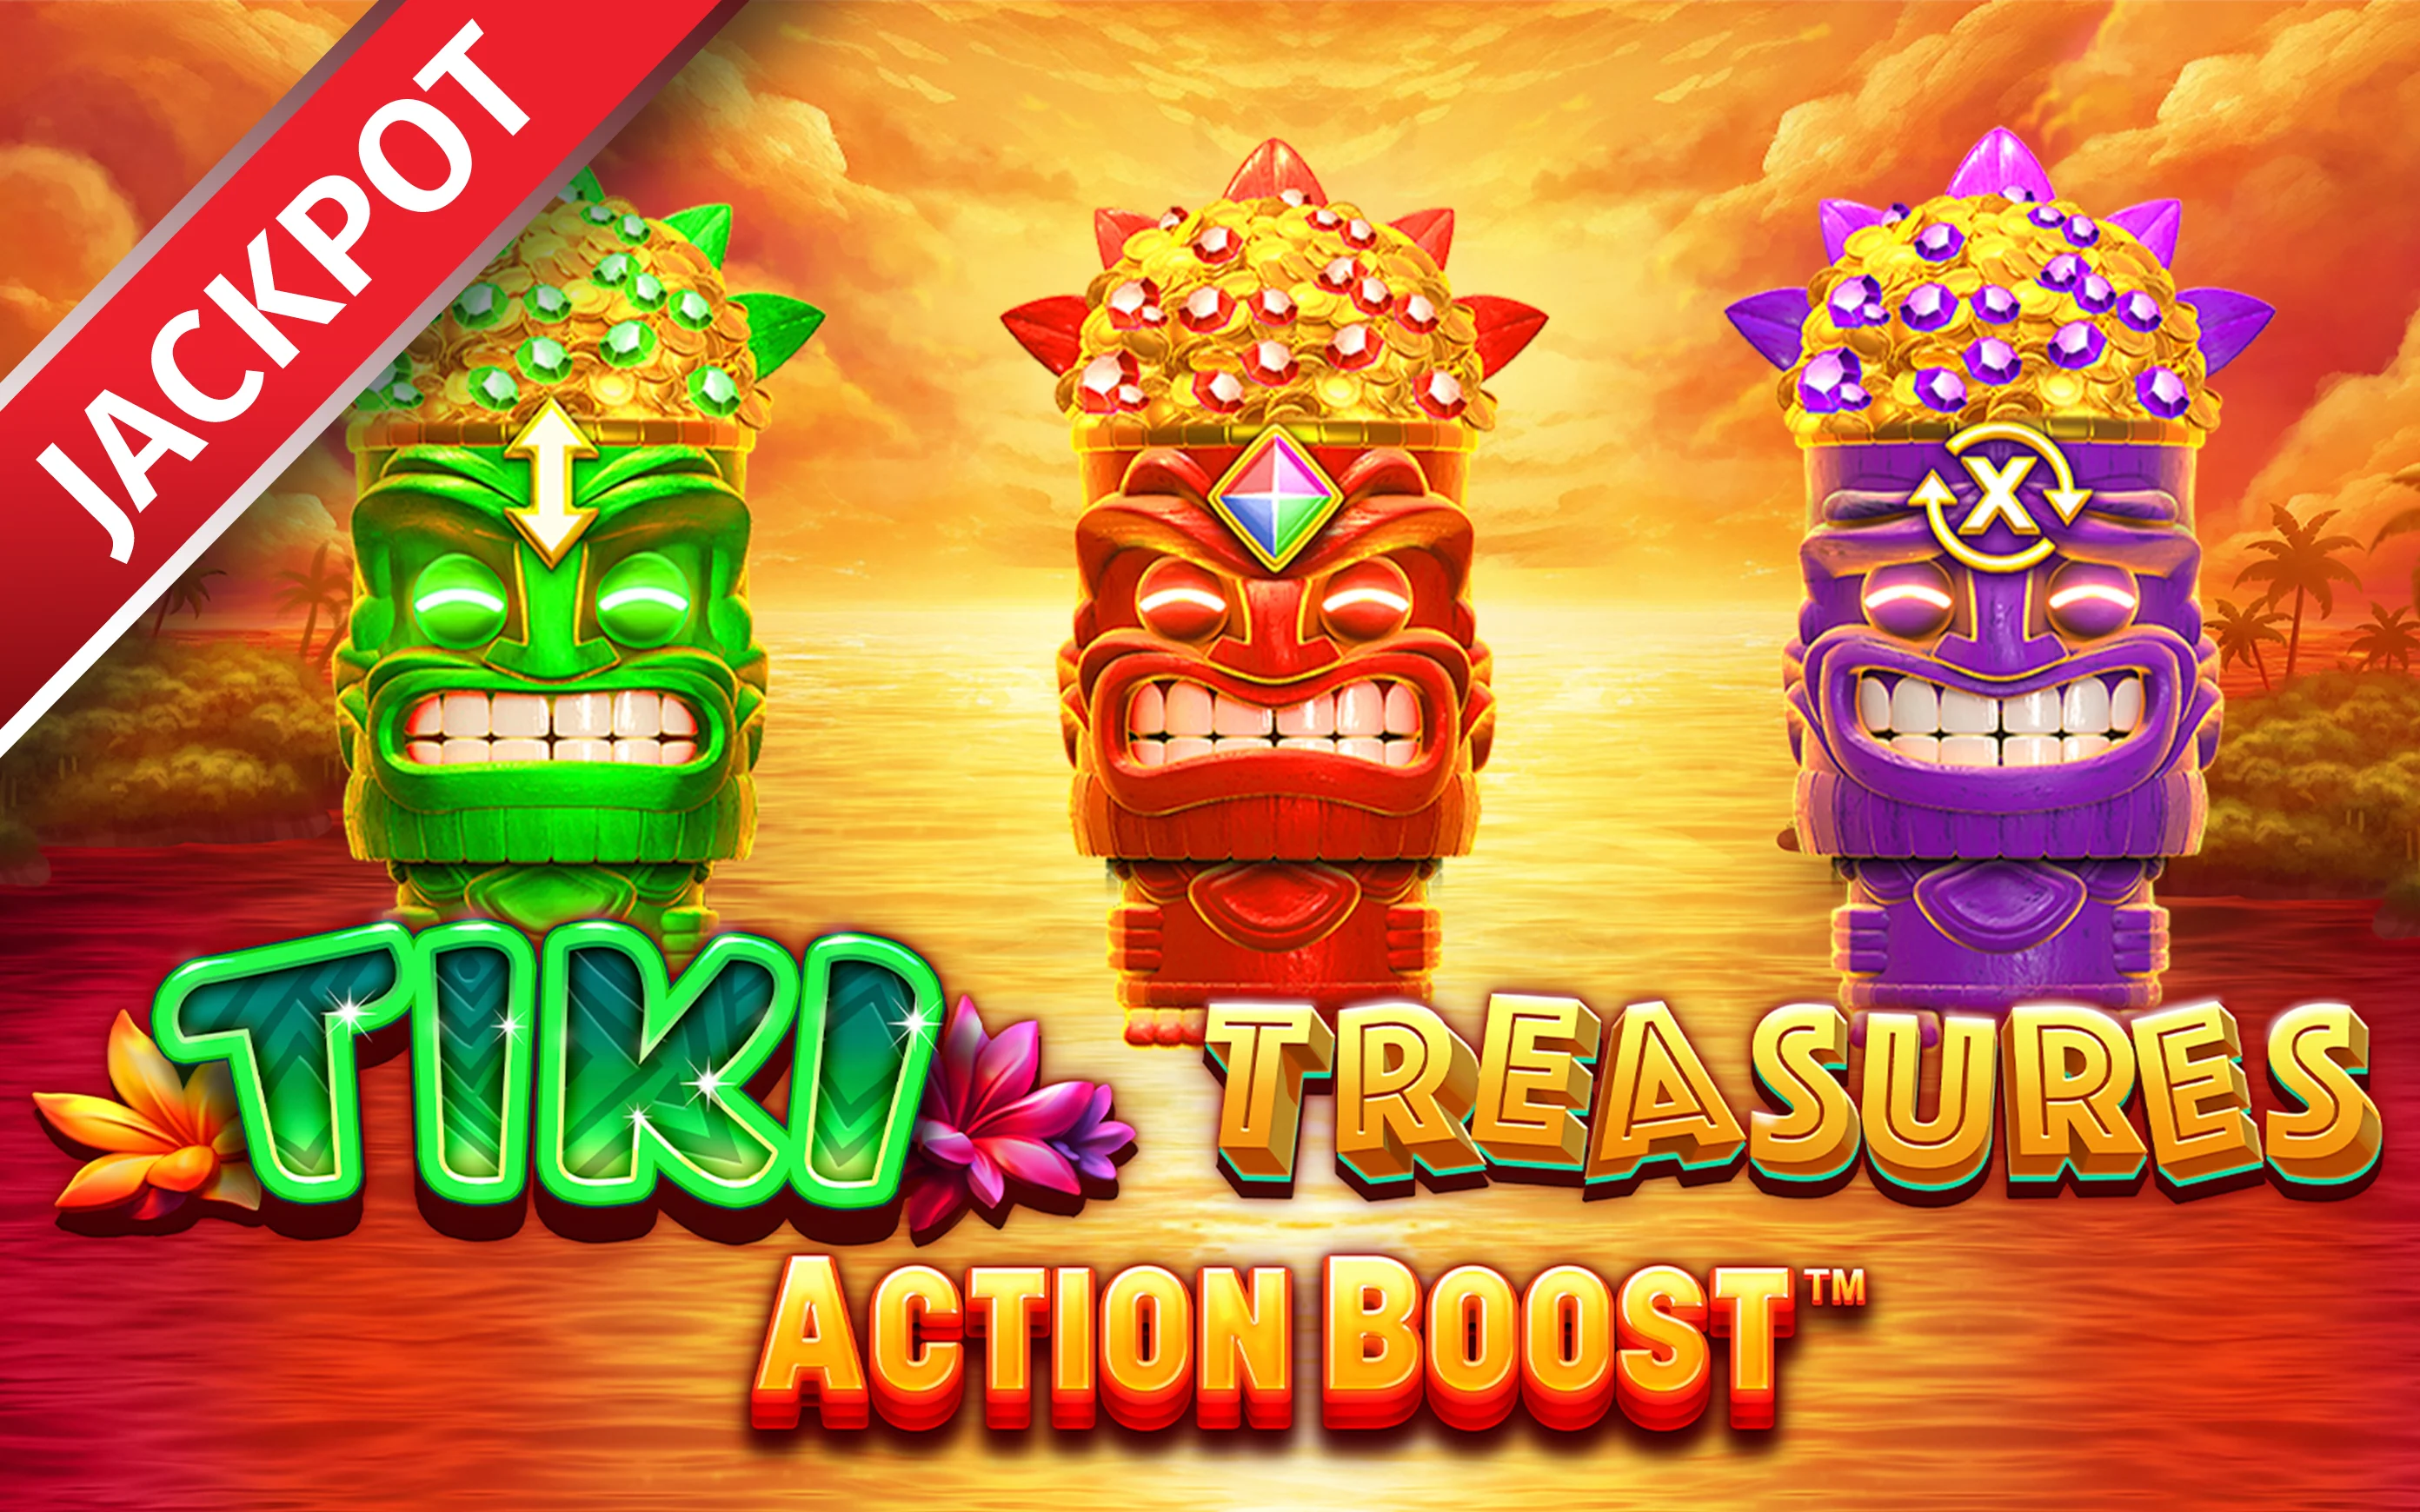 Starcasino.be online casino üzerinden Action Boost™ Tiki Treasures oynayın